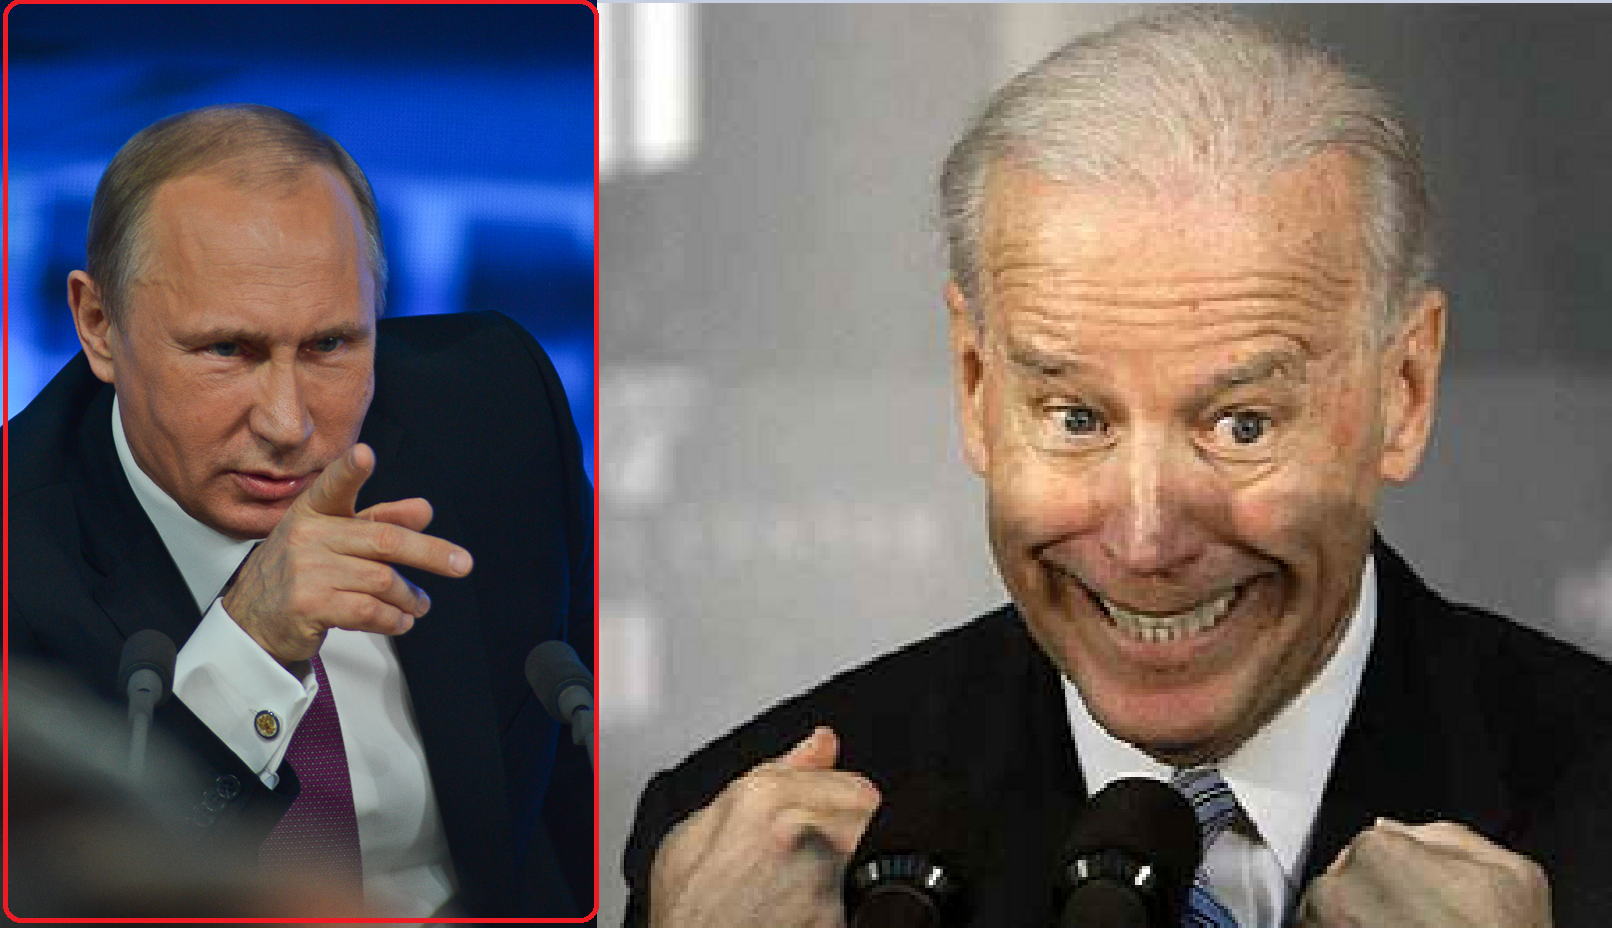 Fox News viewers: "Dirty Joe" to meet with Putin "will wear steel diapers"